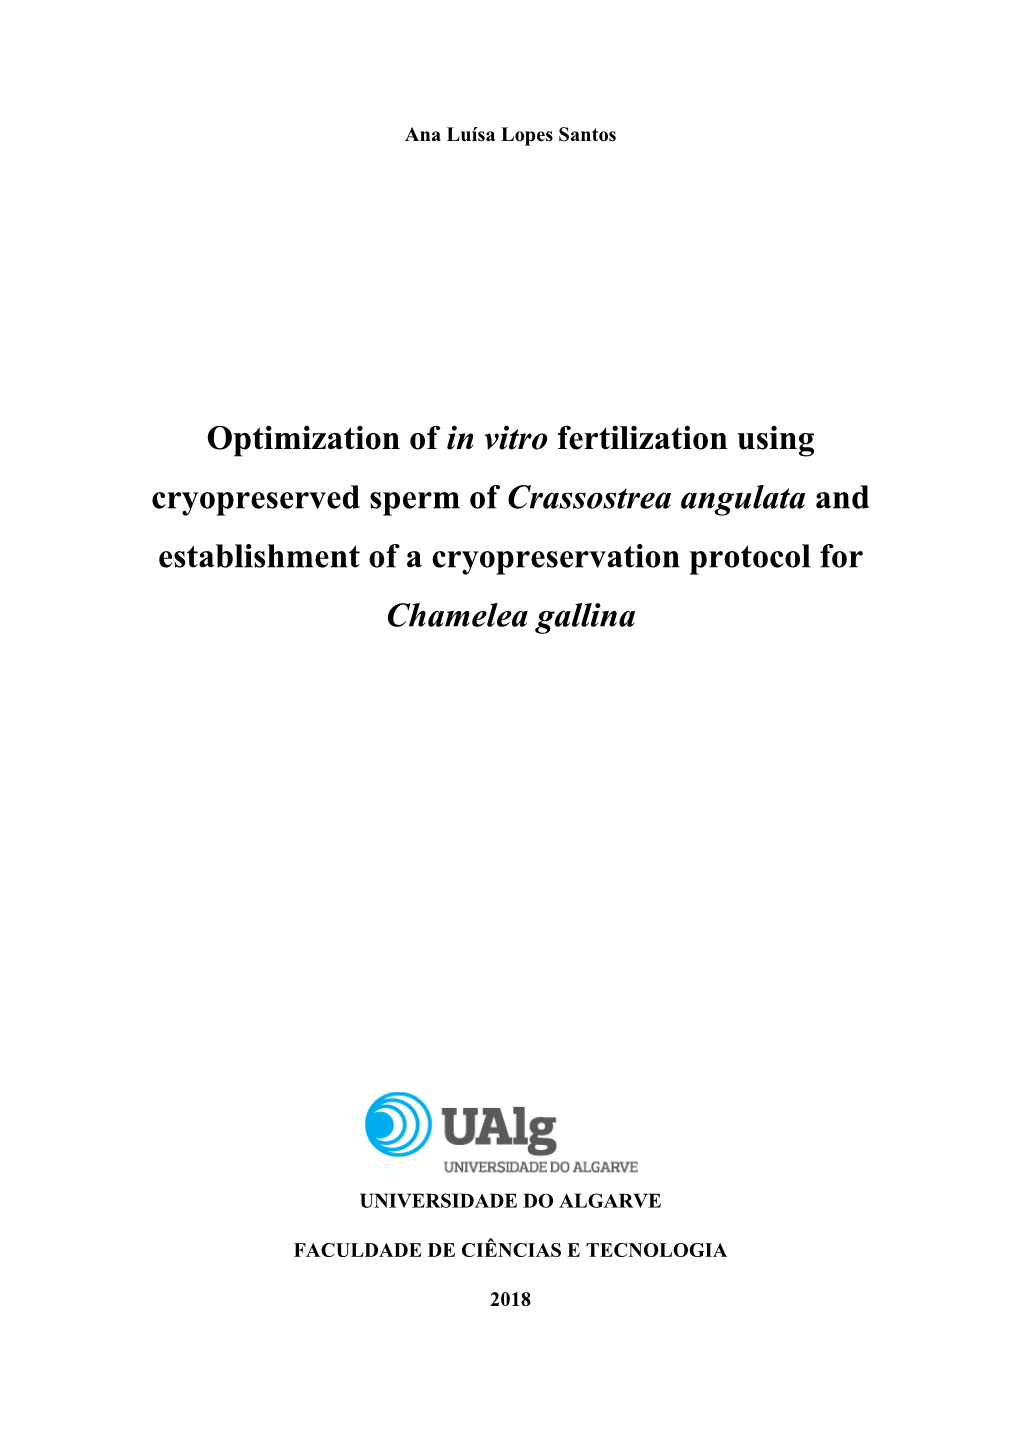 Optimization of in Vitro Fertilization Using Cryopreserved Sperm of Crassostrea Angulata and Establishment of a Cryopreservation Protocol for Chamelea Gallina